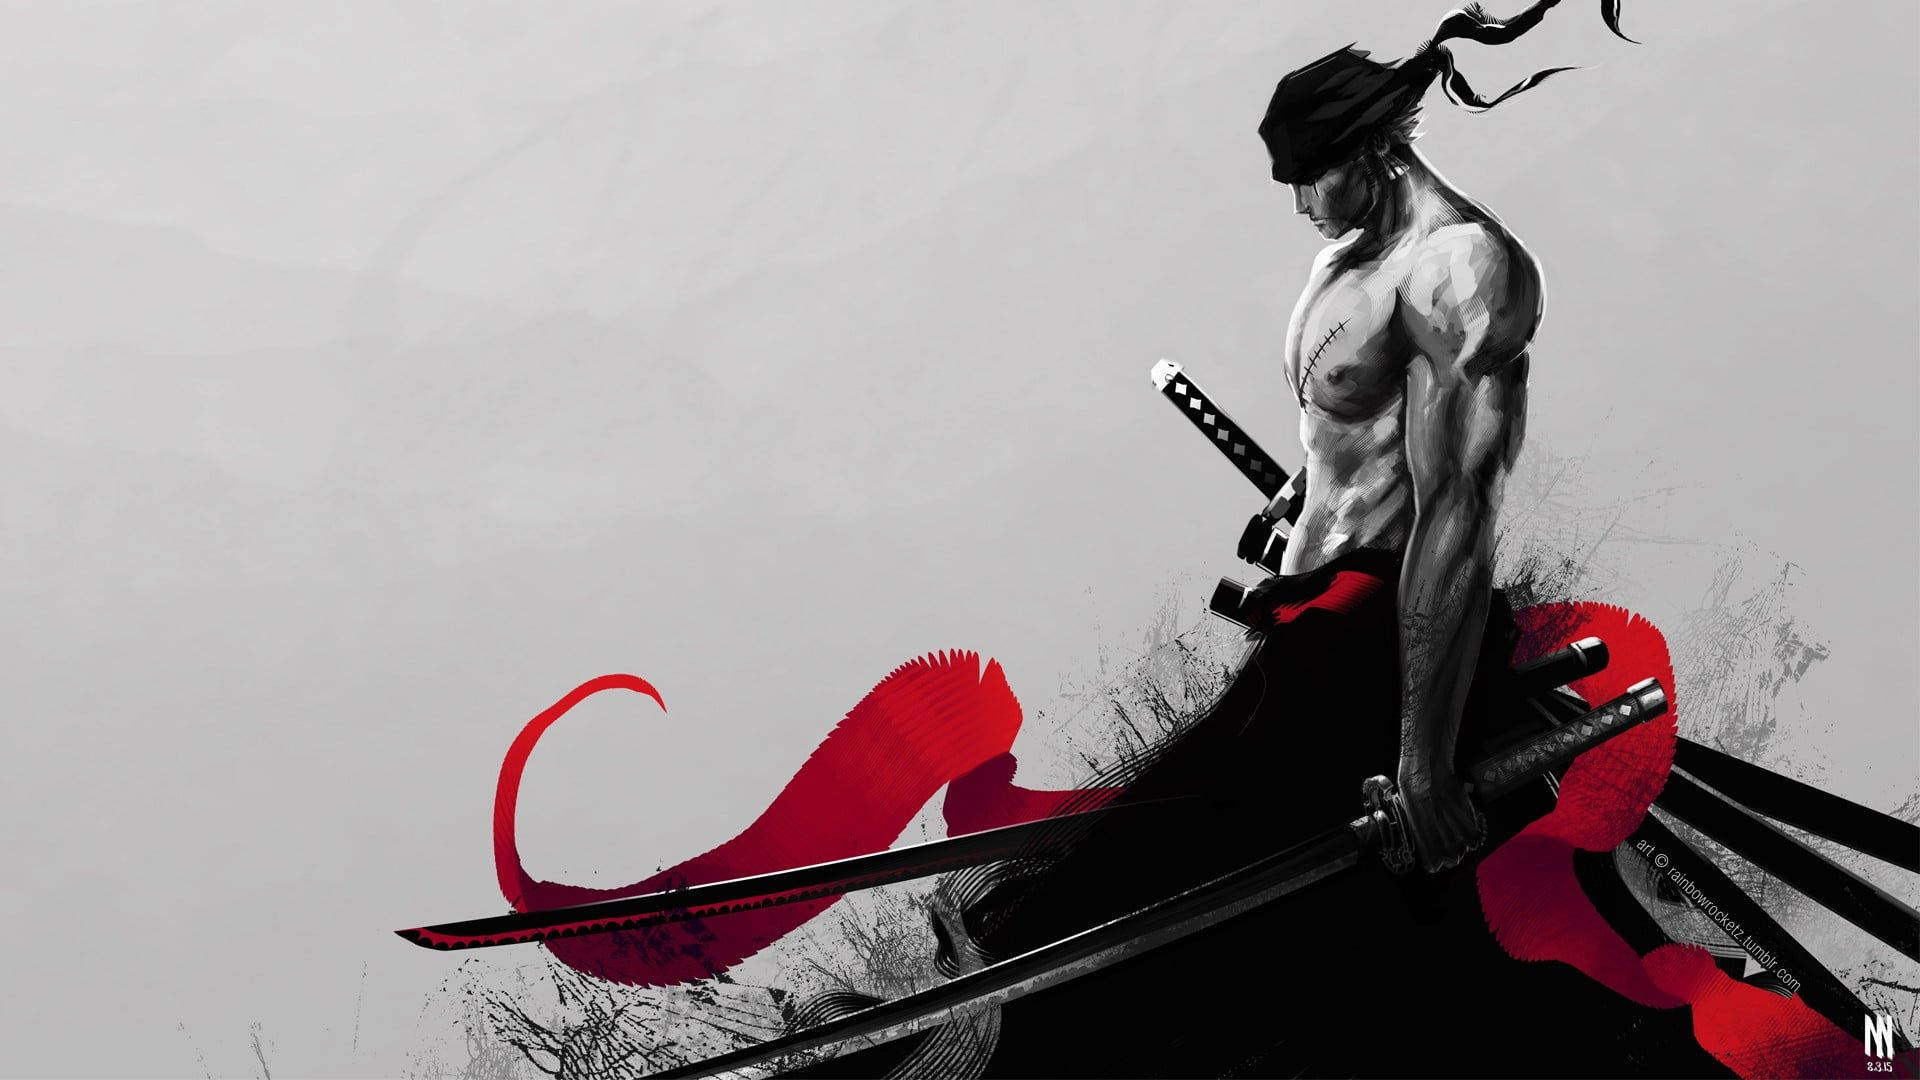 Image  Zoro, the fictional swordsman, sheaths his two katanas. Wallpaper